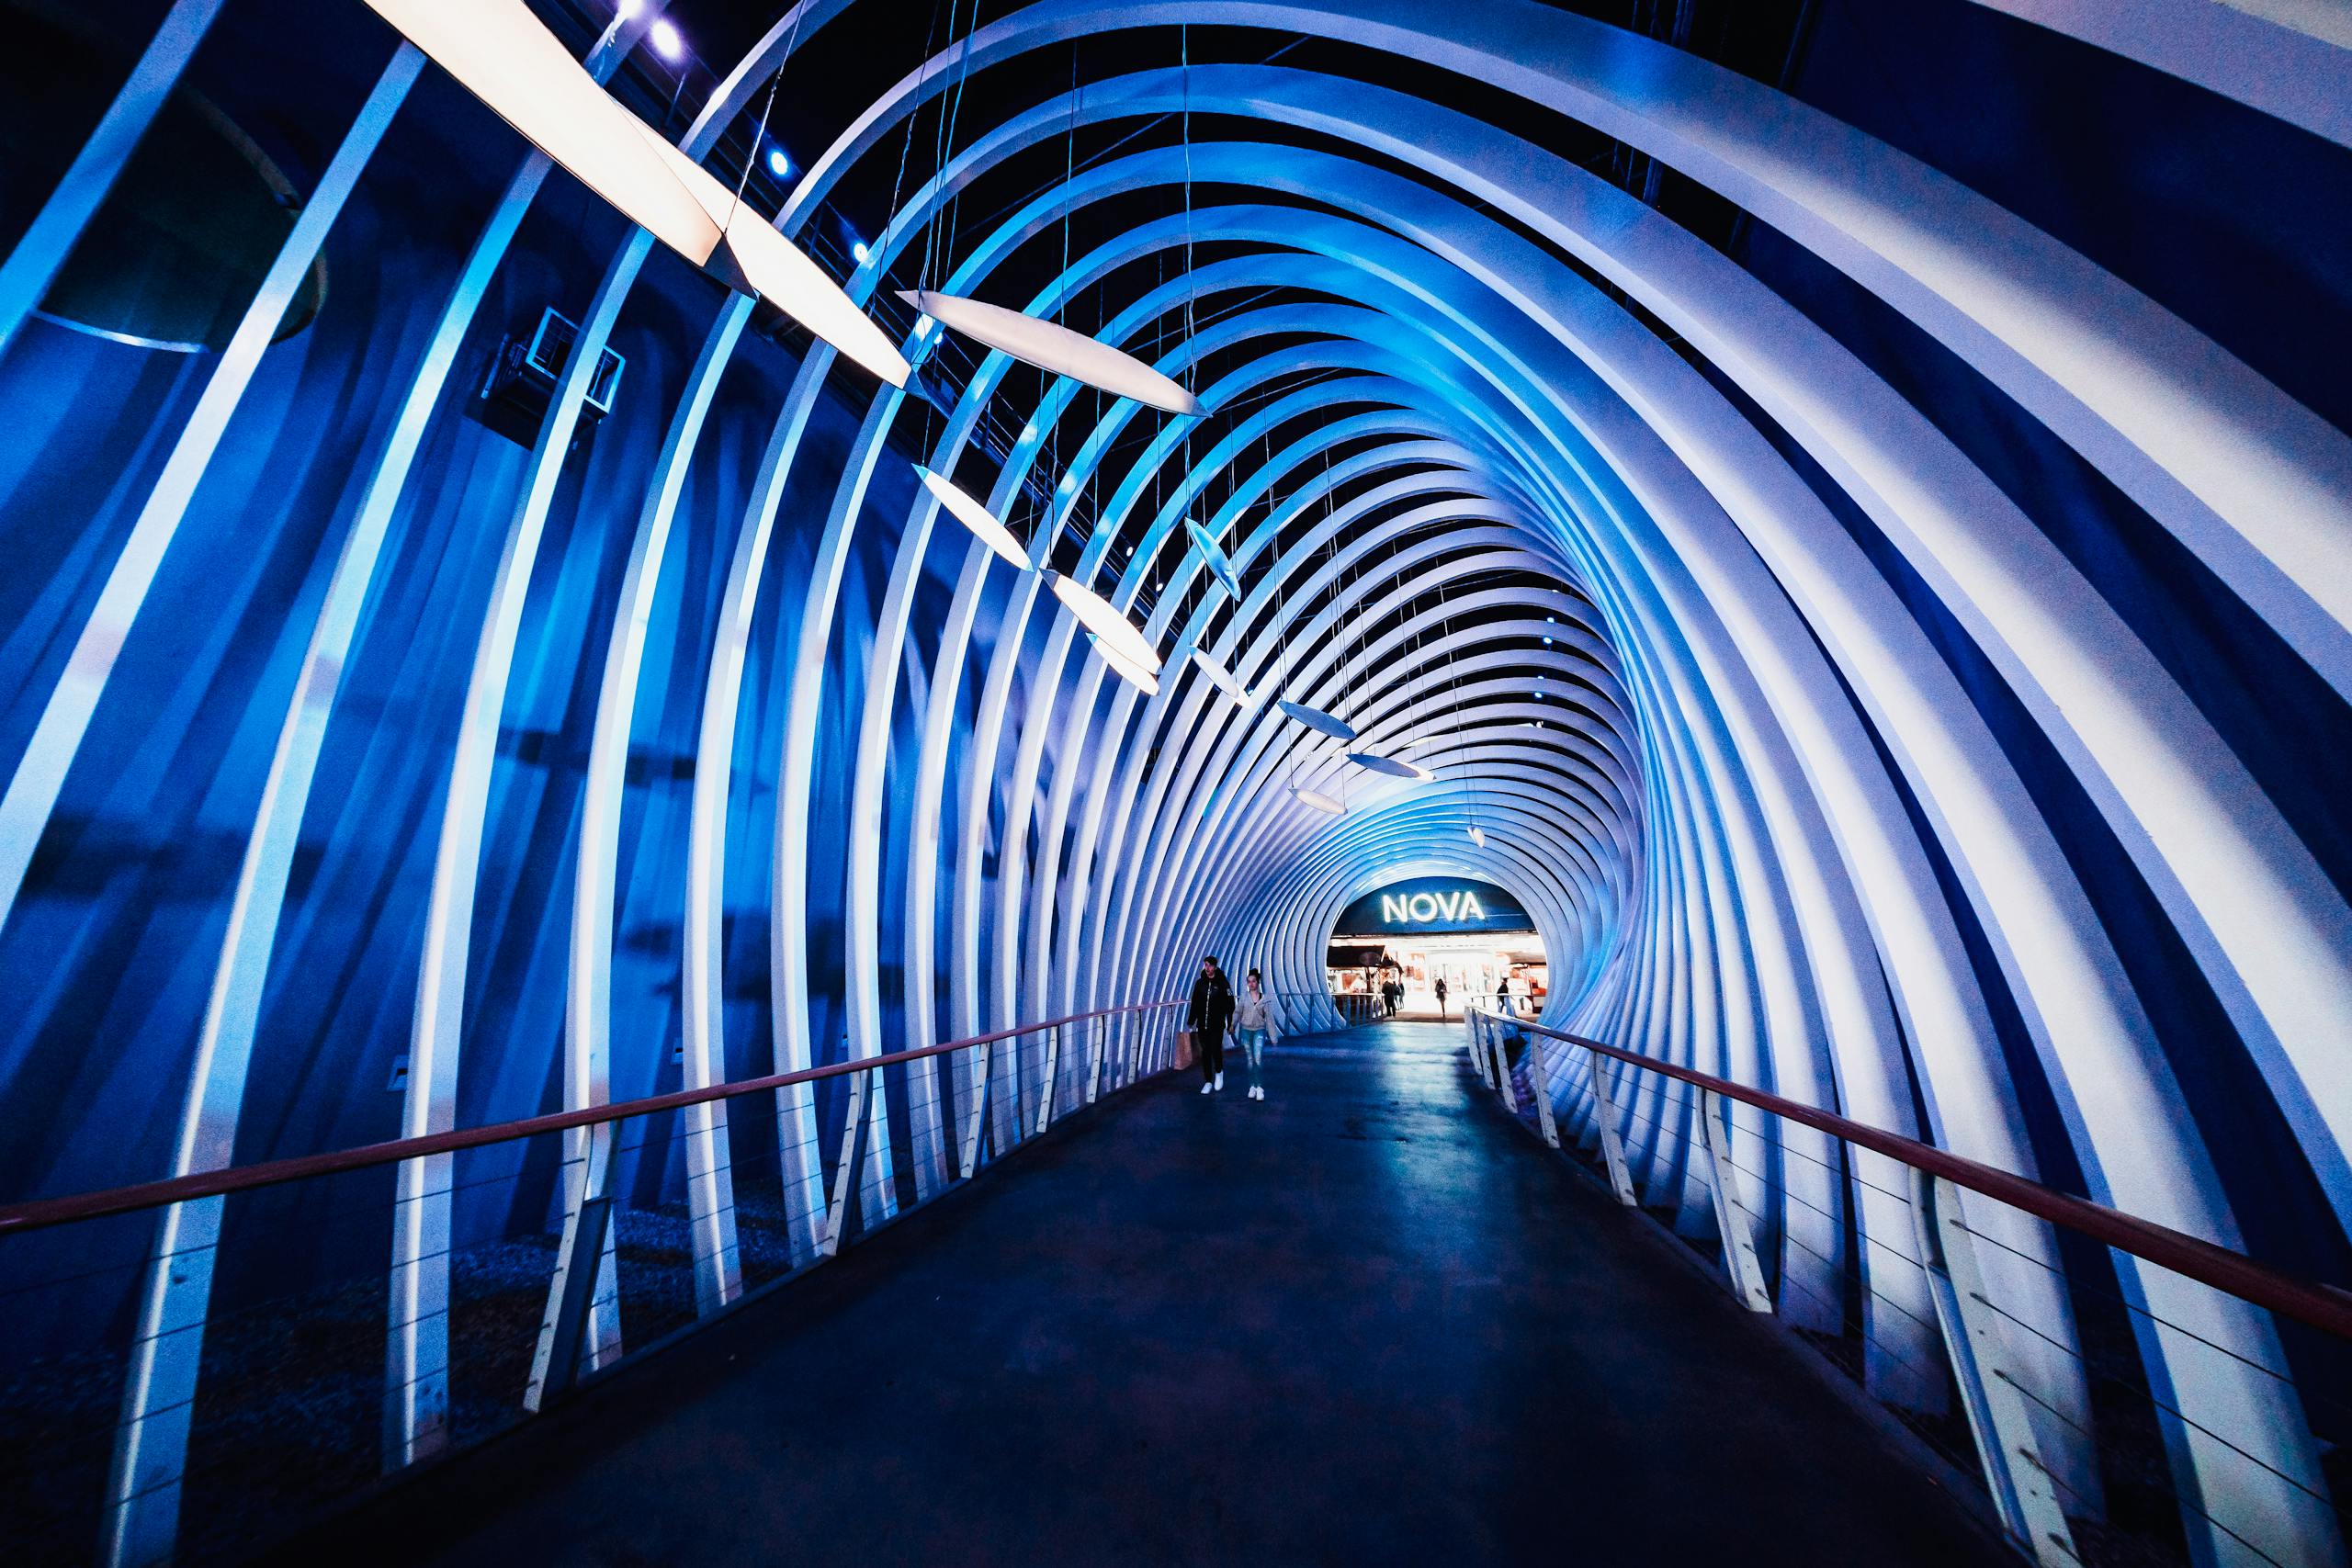 Illuminated Tunnel at Nova Eventis Shopping Mall in Leipzig, Germany